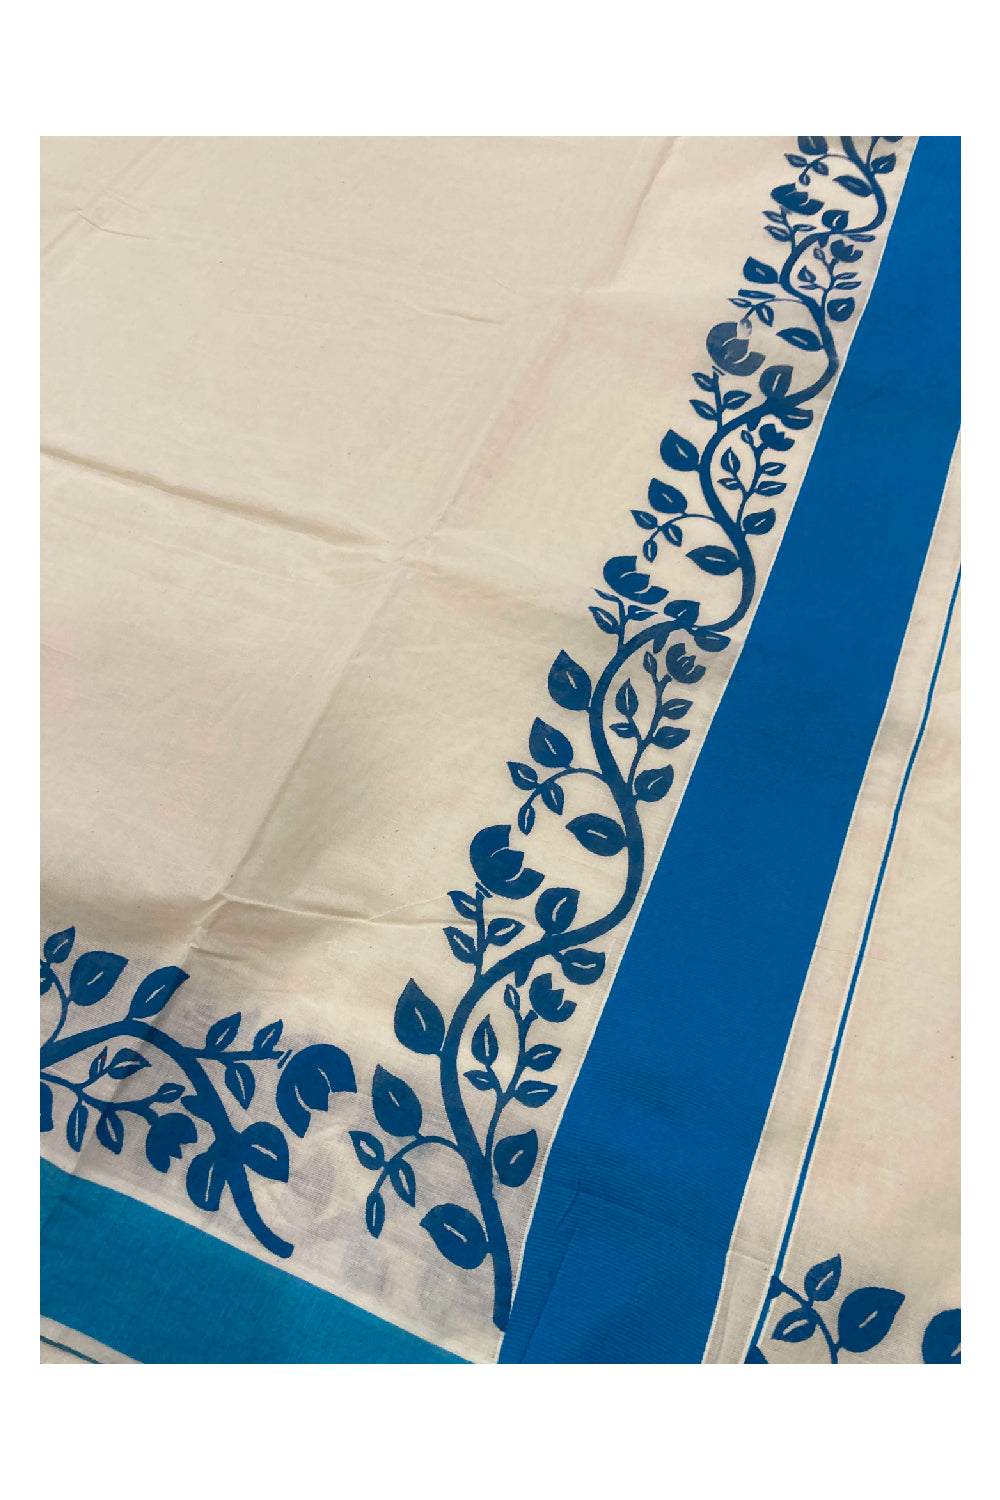 Southloom Original Design Kerala Saree with Blue Floral Vines Block Print